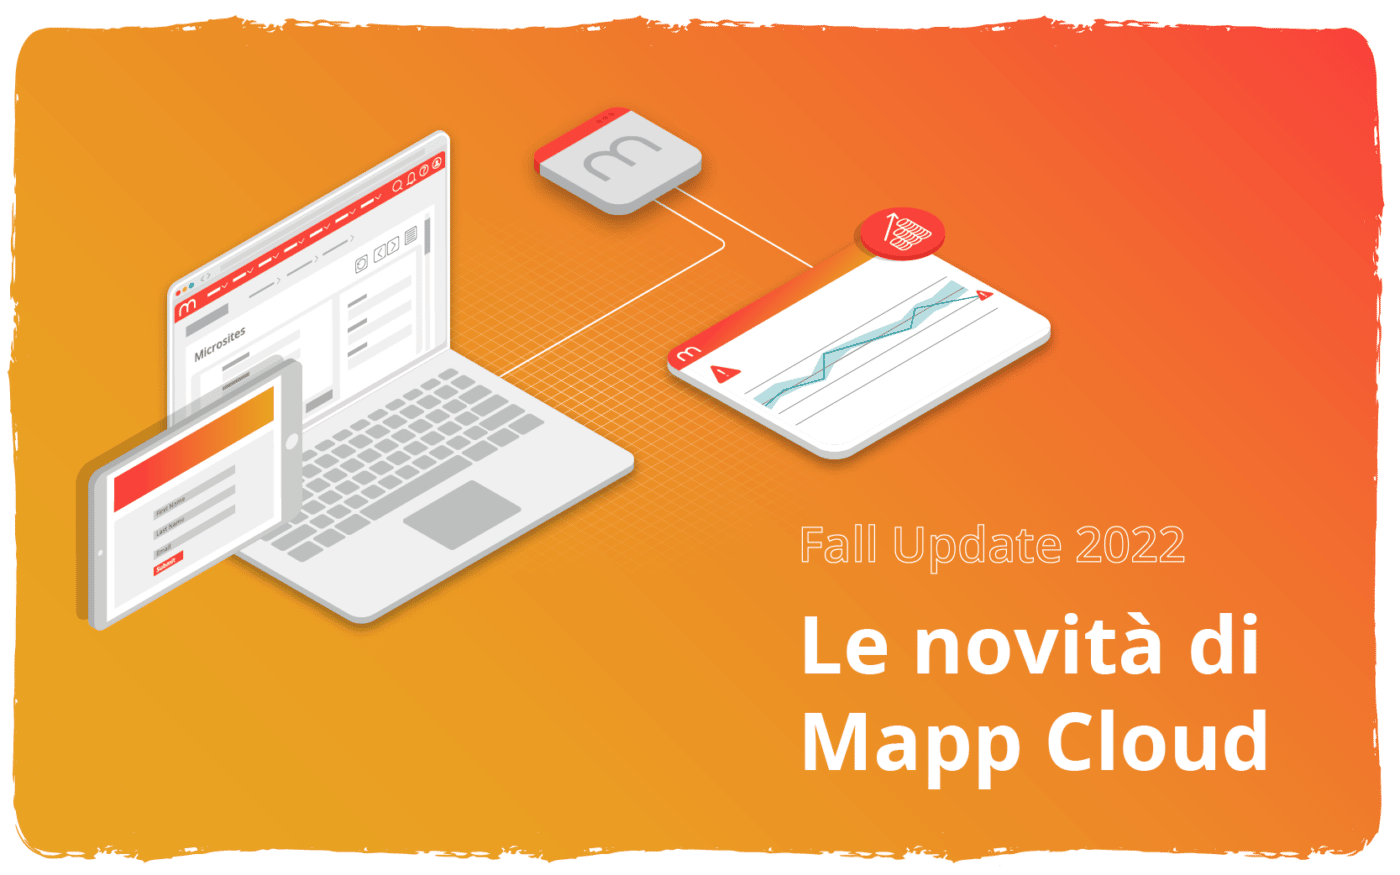 Fall Update di Mapp Cloud: nuove notifiche intelligenti e nove aggiornamenti');